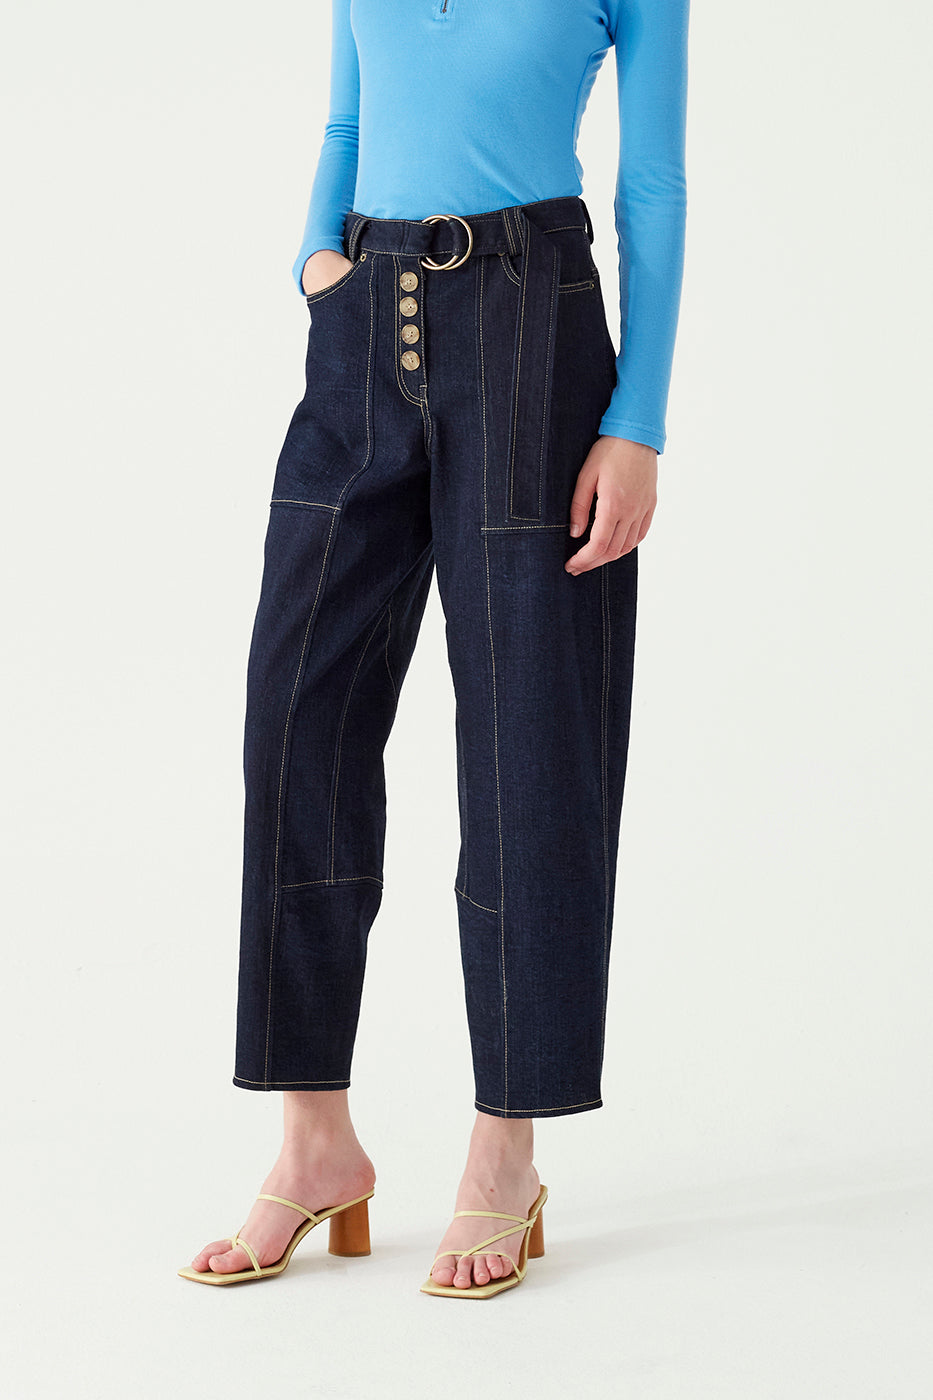 Dalia Jeans in Organic Cotton Indigo Denim by Rejina Pyo